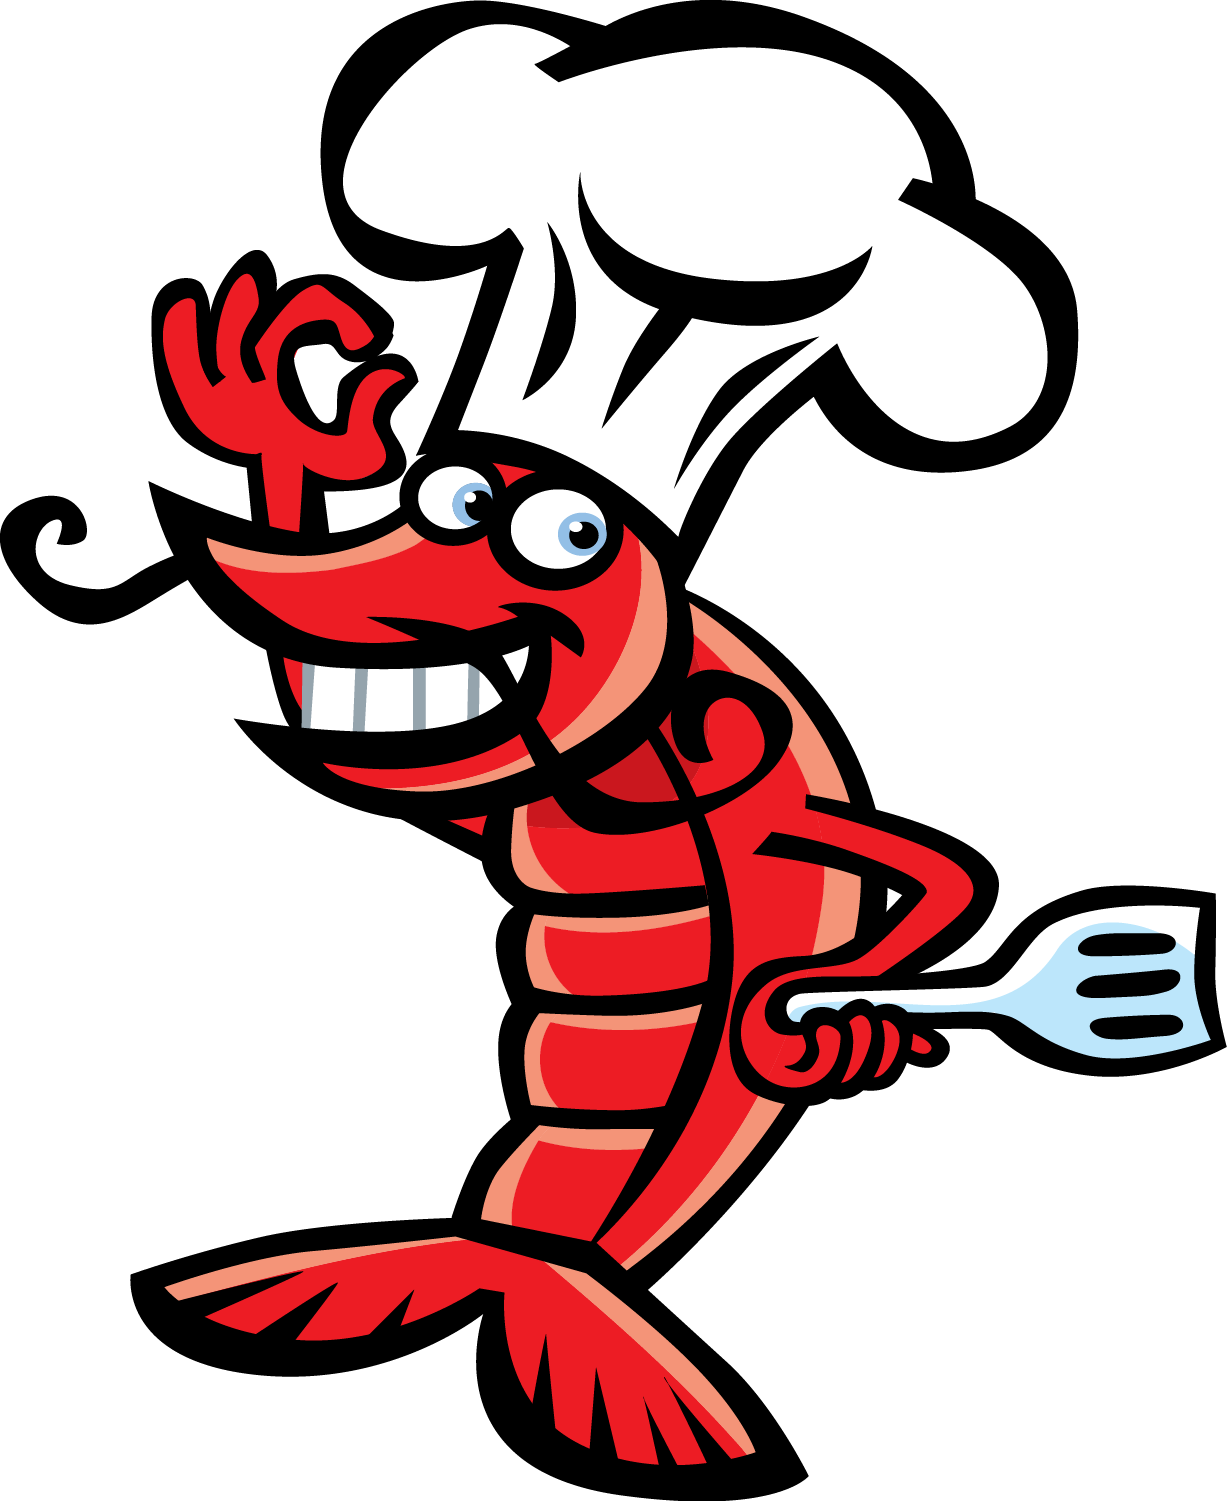 Shrimp clipart shrimp.